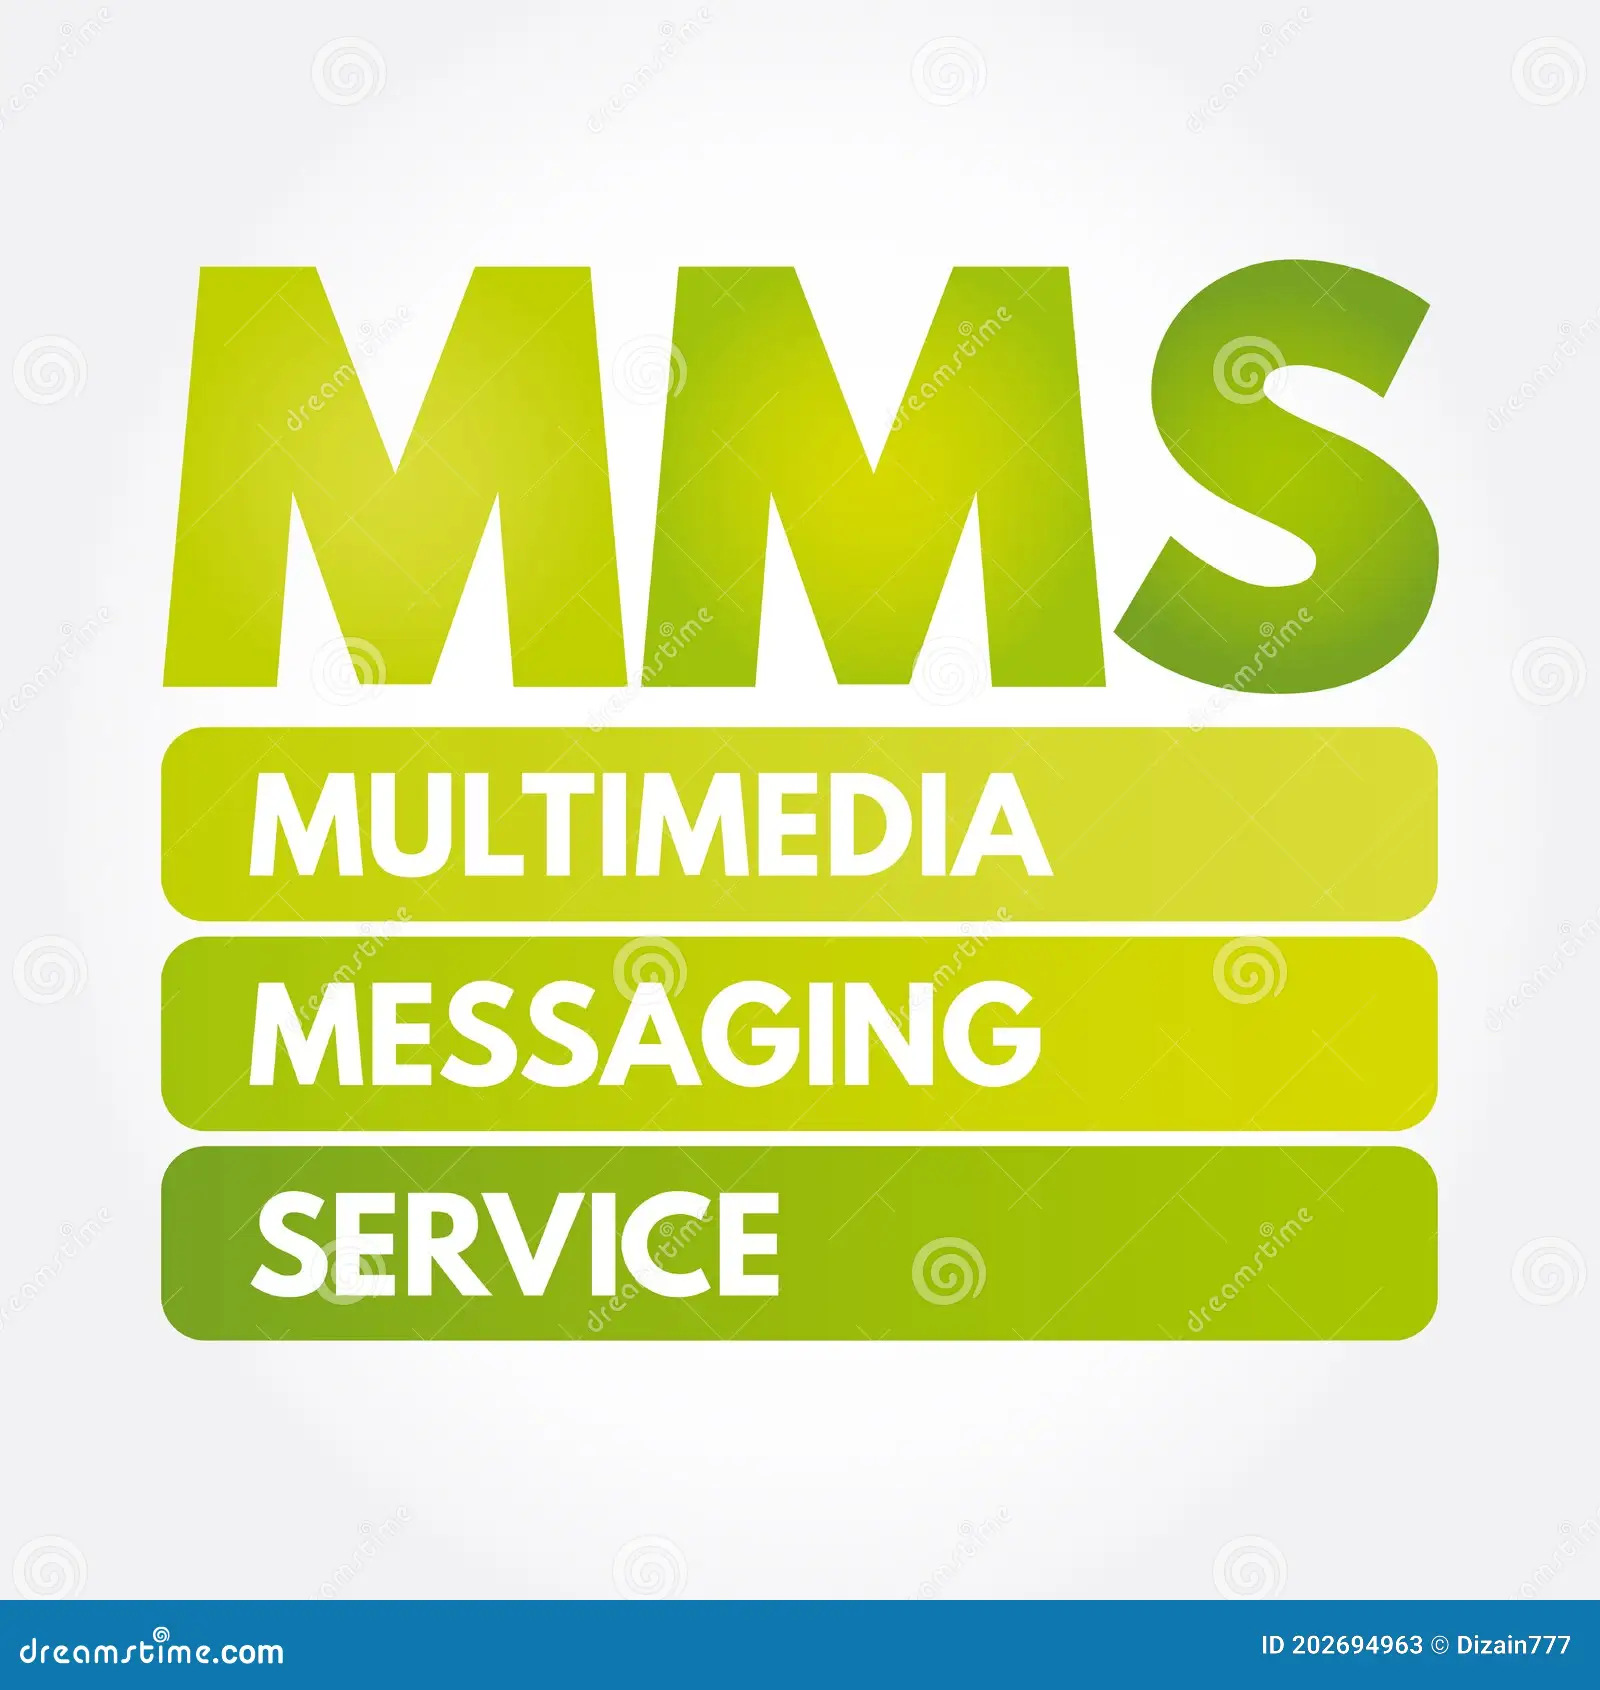 Multimedia Messaging Service (MMS)